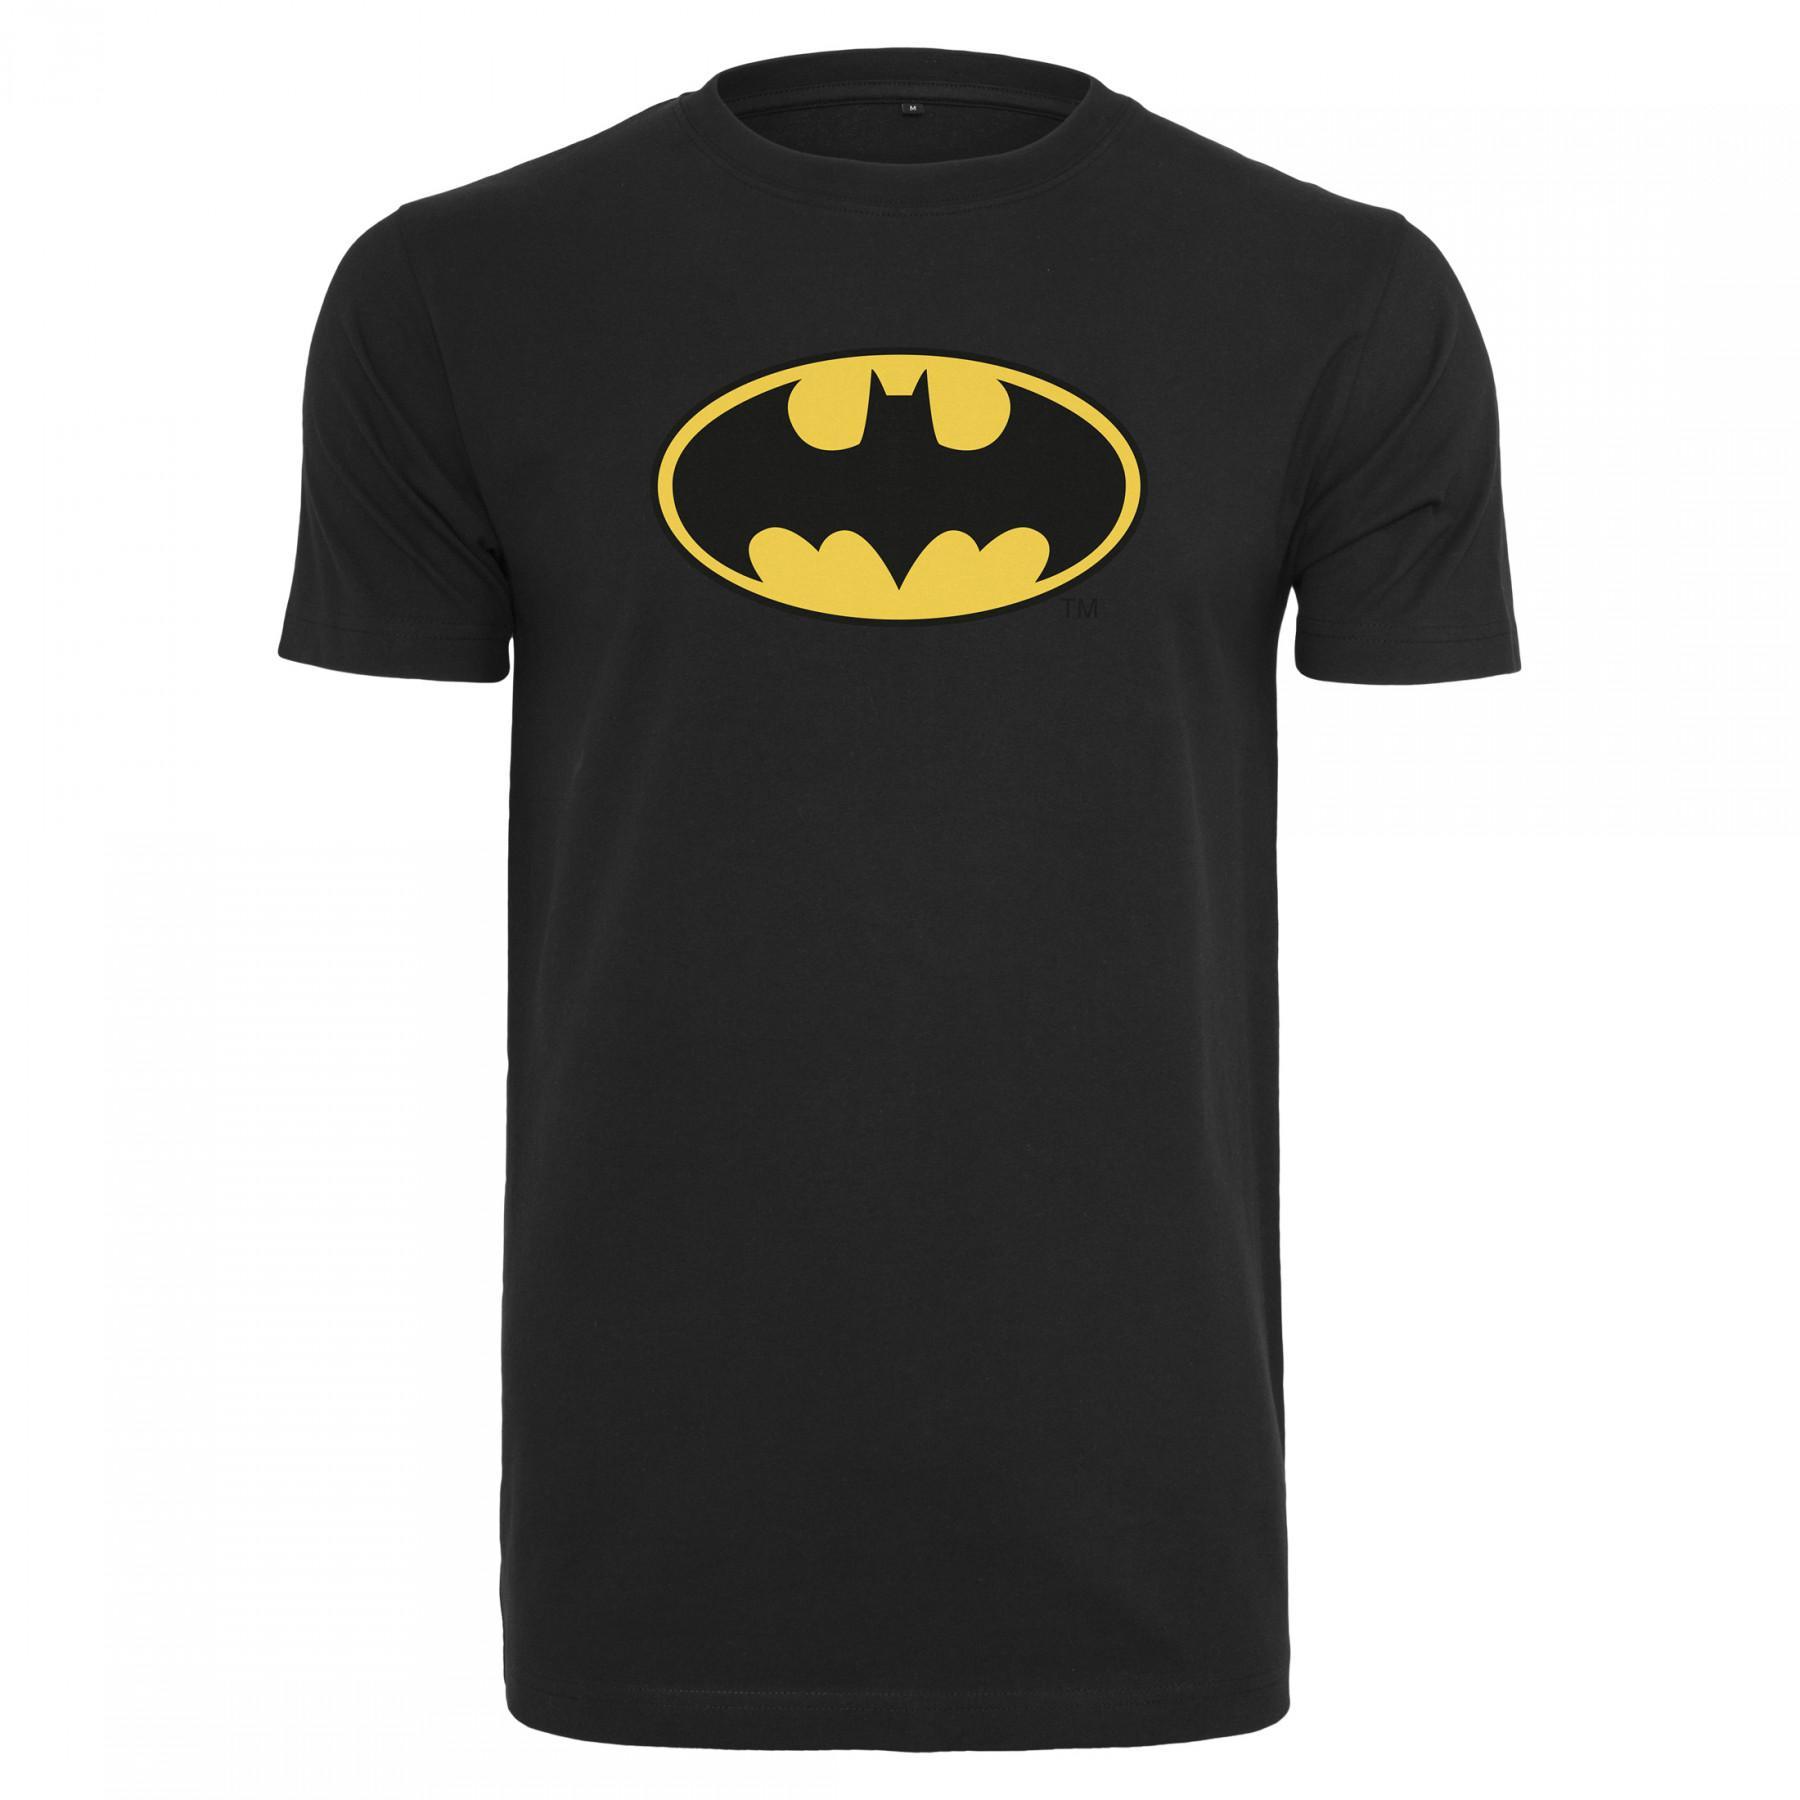 Urban Classic batman logo t-shirt